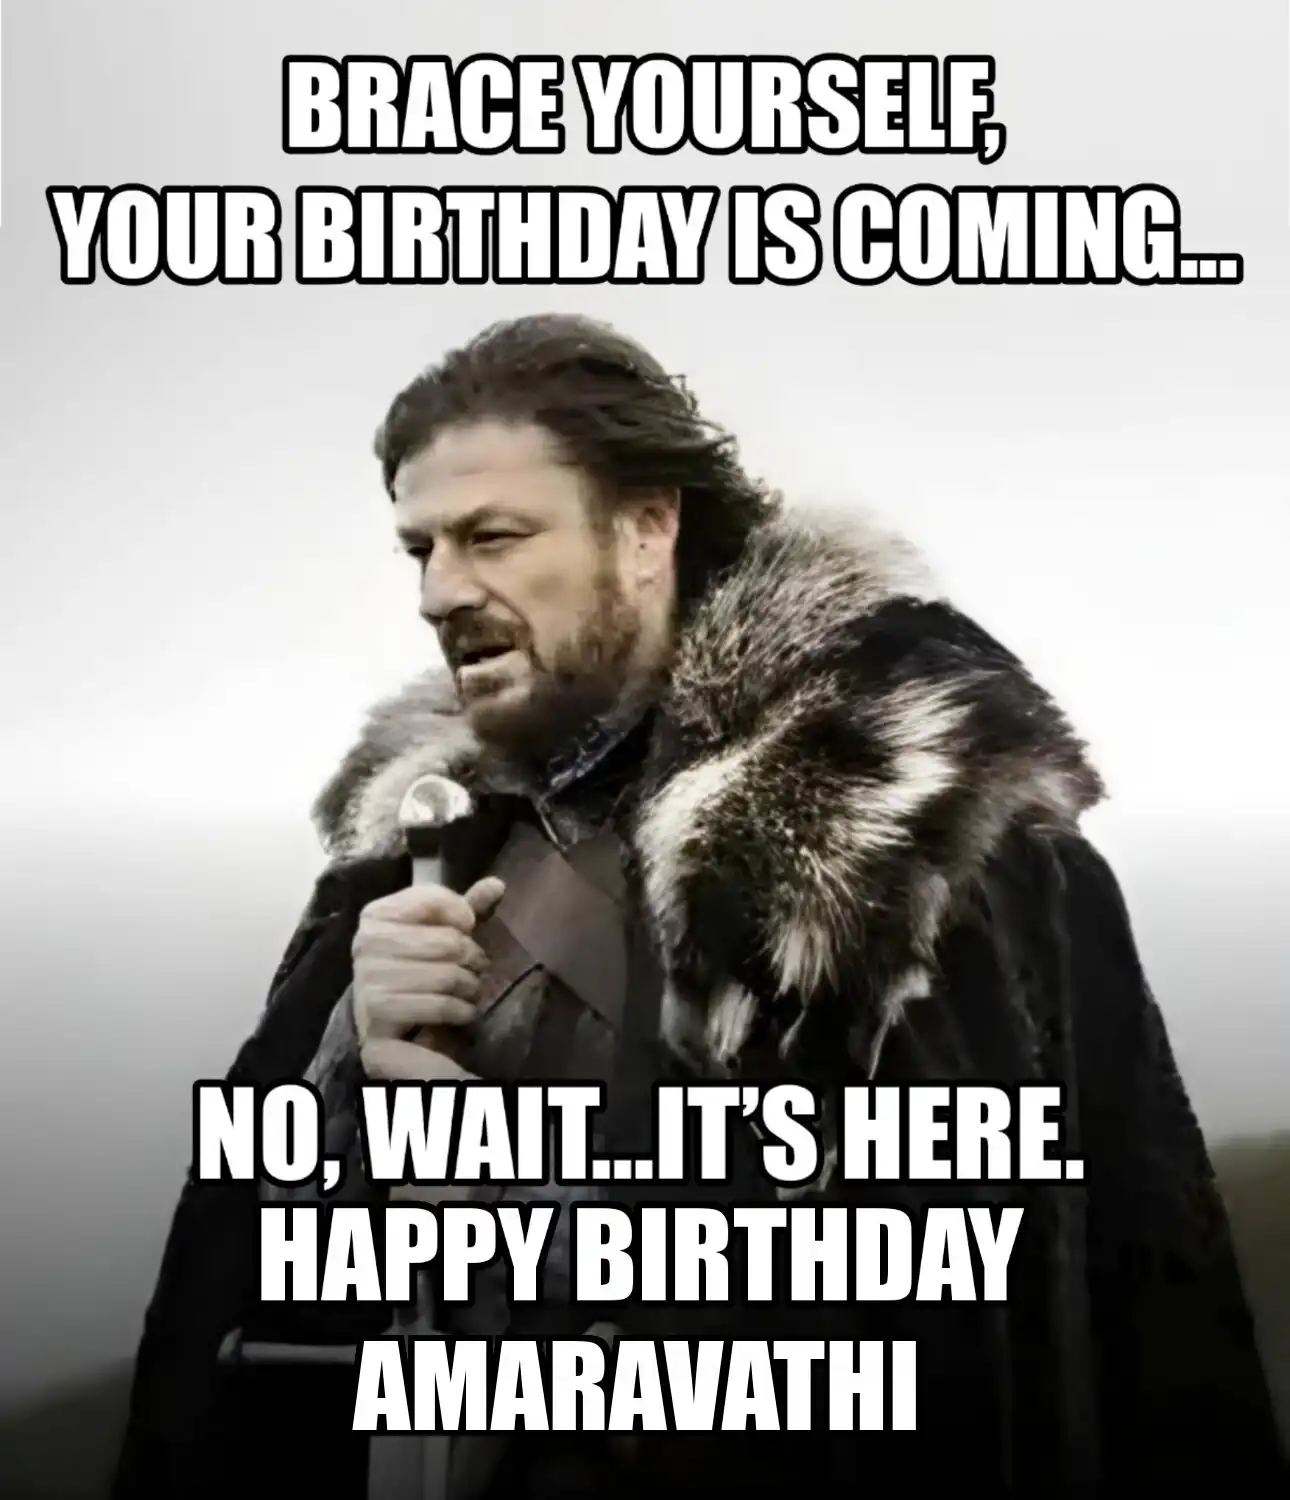 Happy Birthday Amaravathi Brace Yourself Your Birthday Is Coming Meme